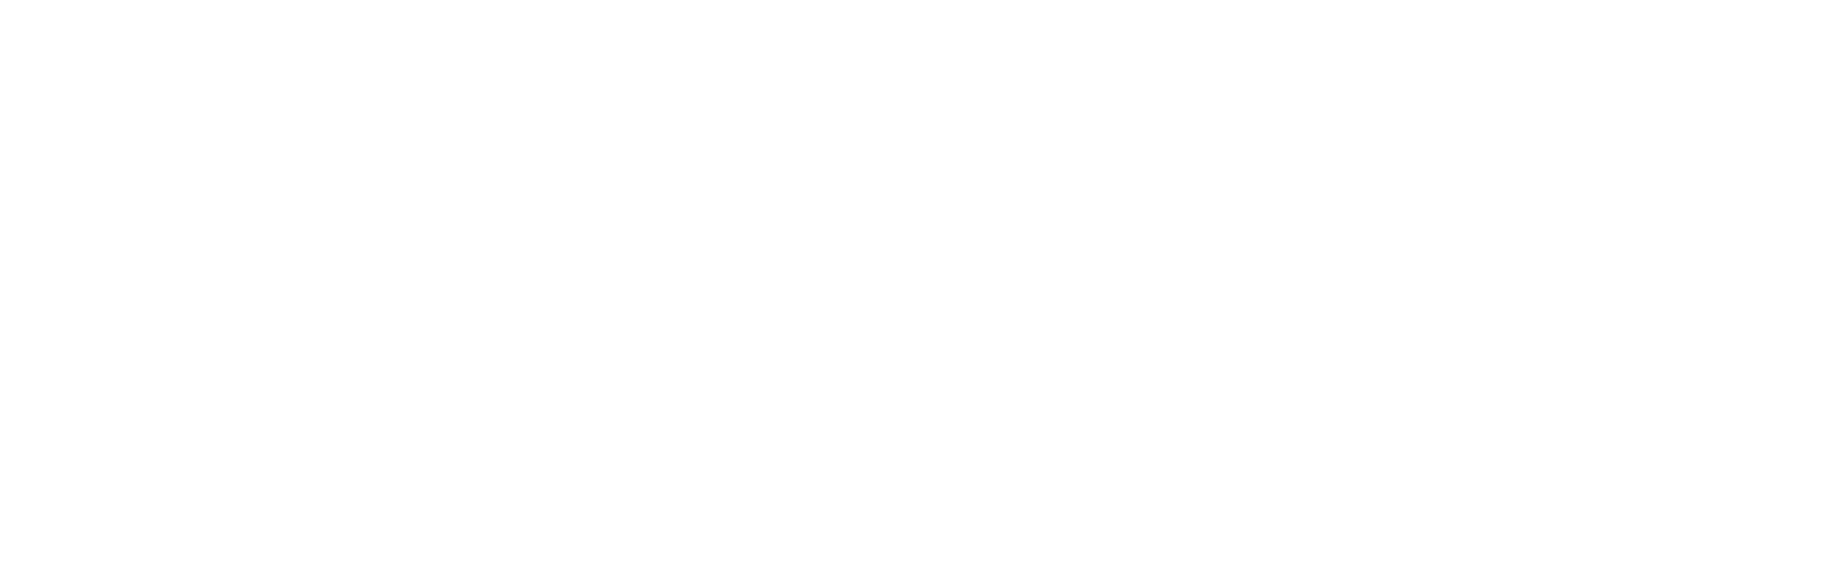 Gastrocentro (1)